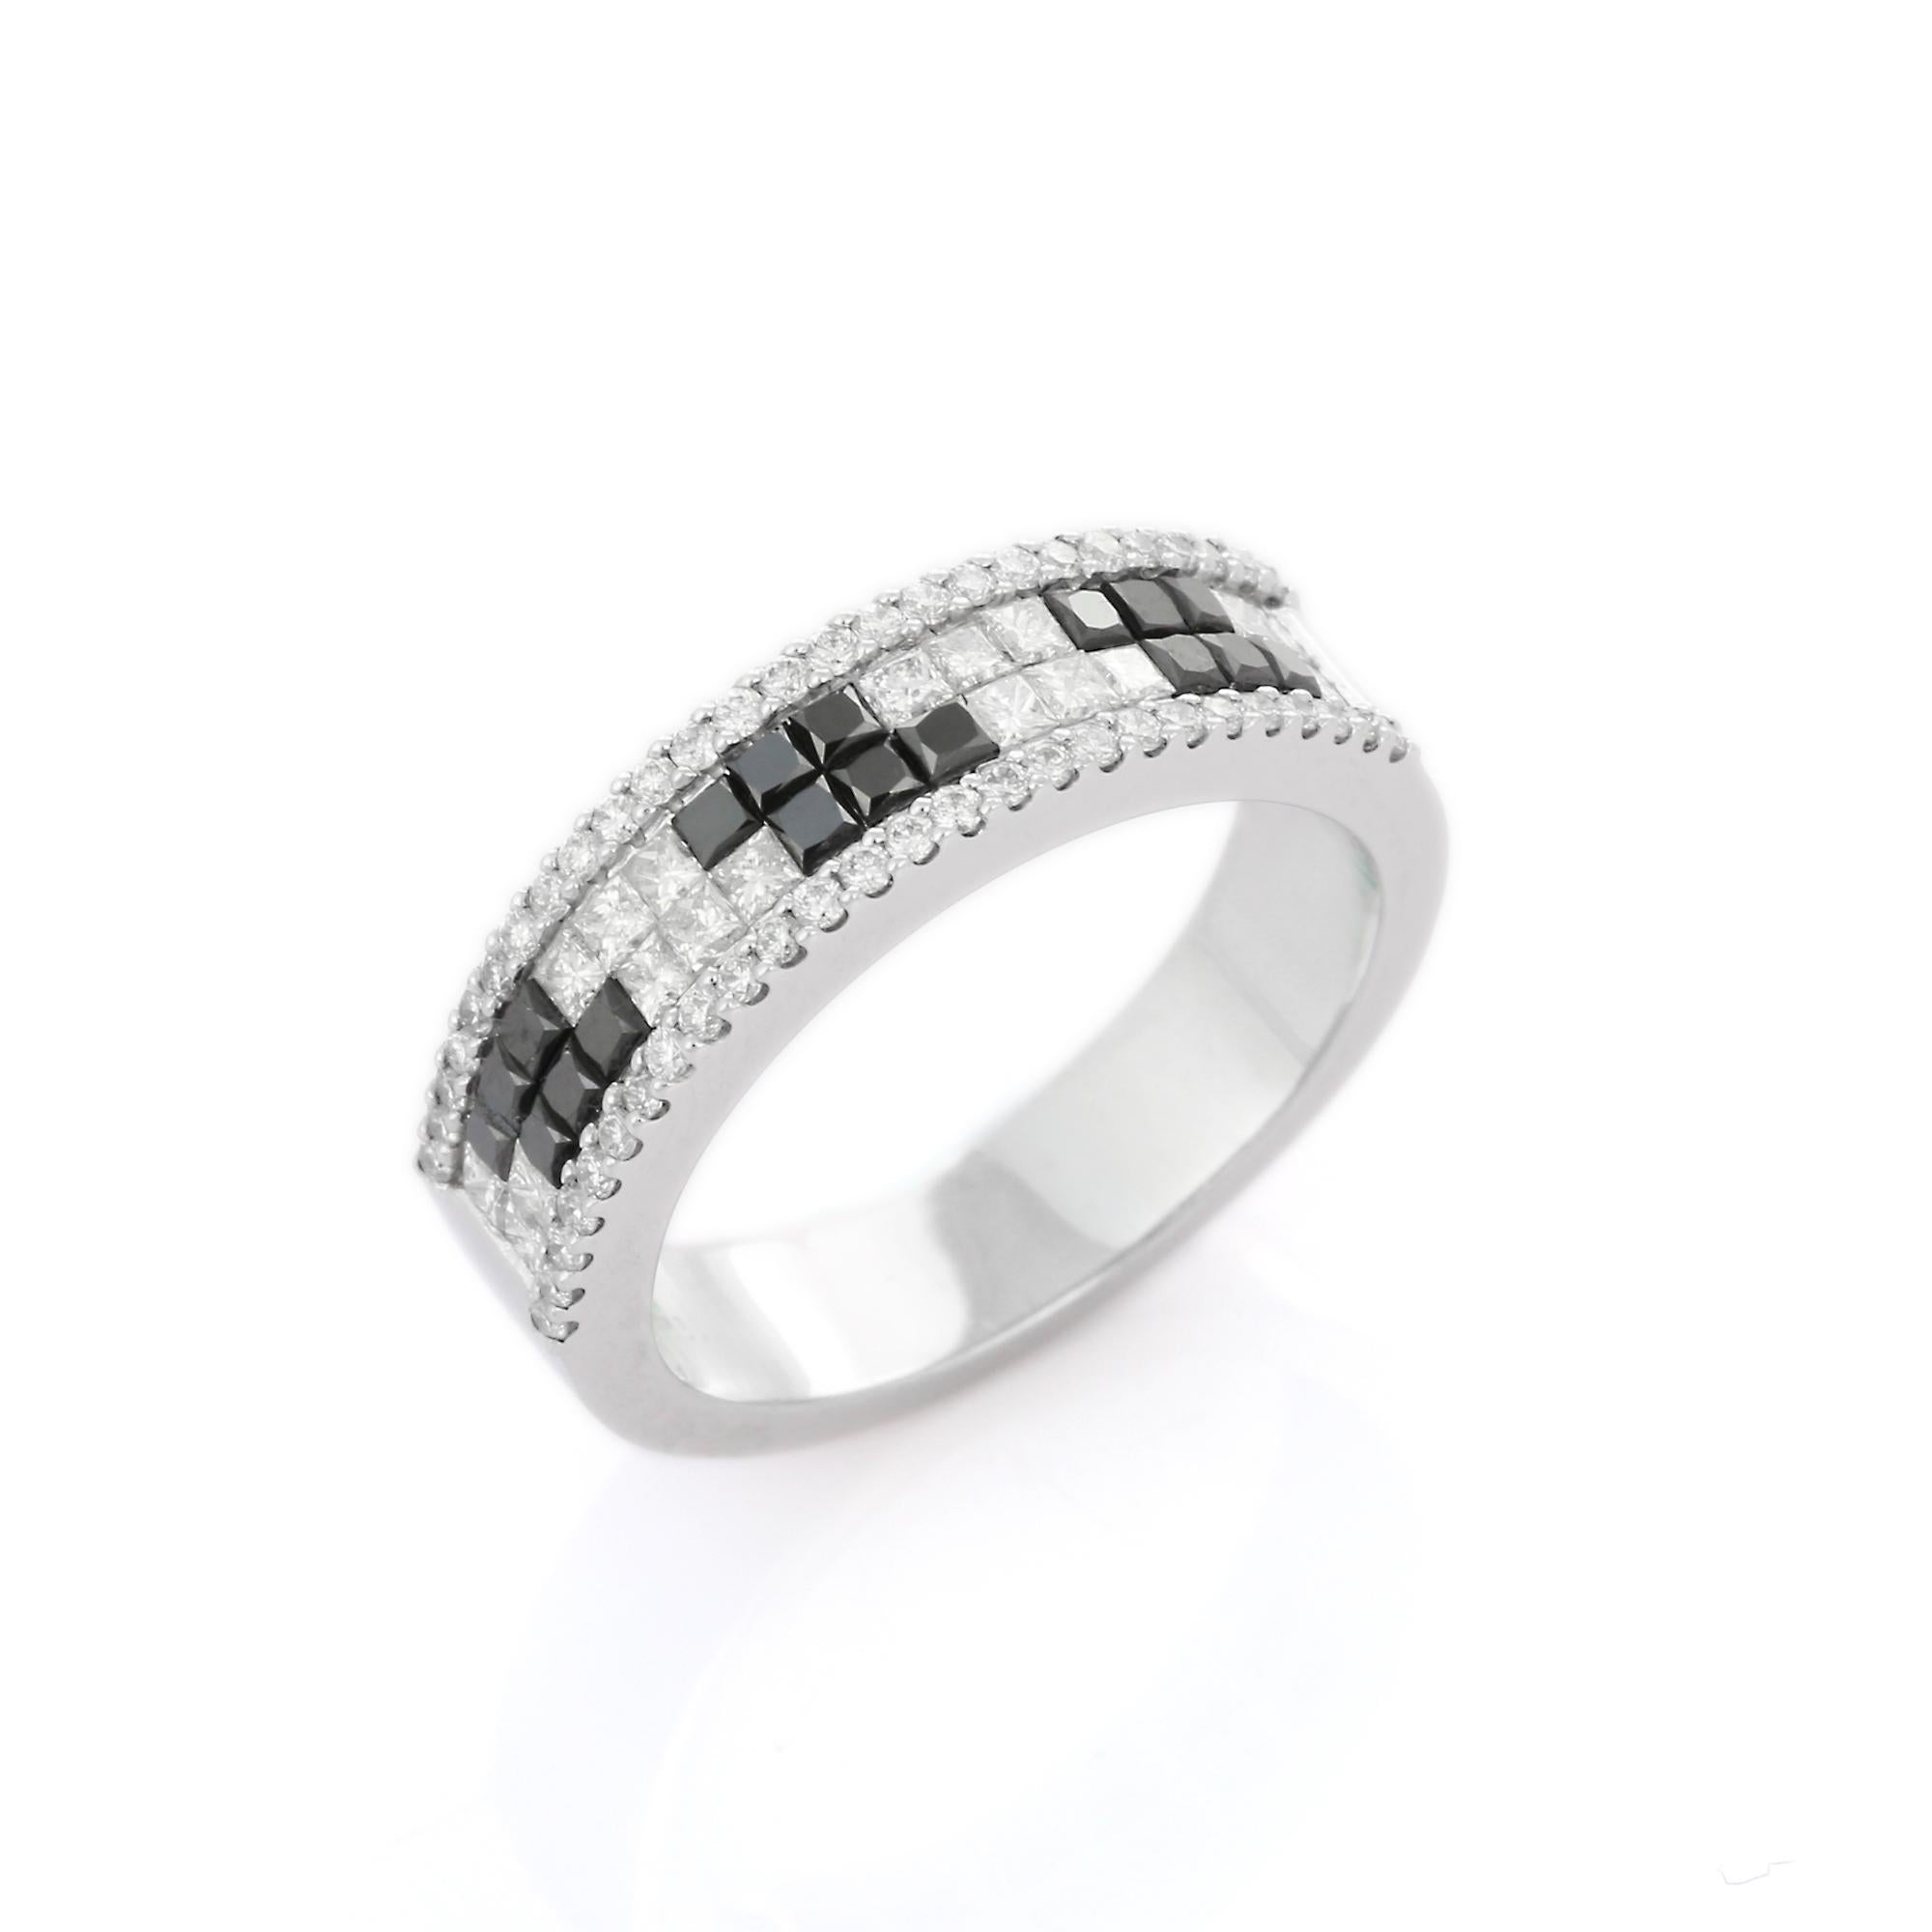 For Sale:  Unisex Black White Diamond Engagement Band Ring in 18K White Gold  2